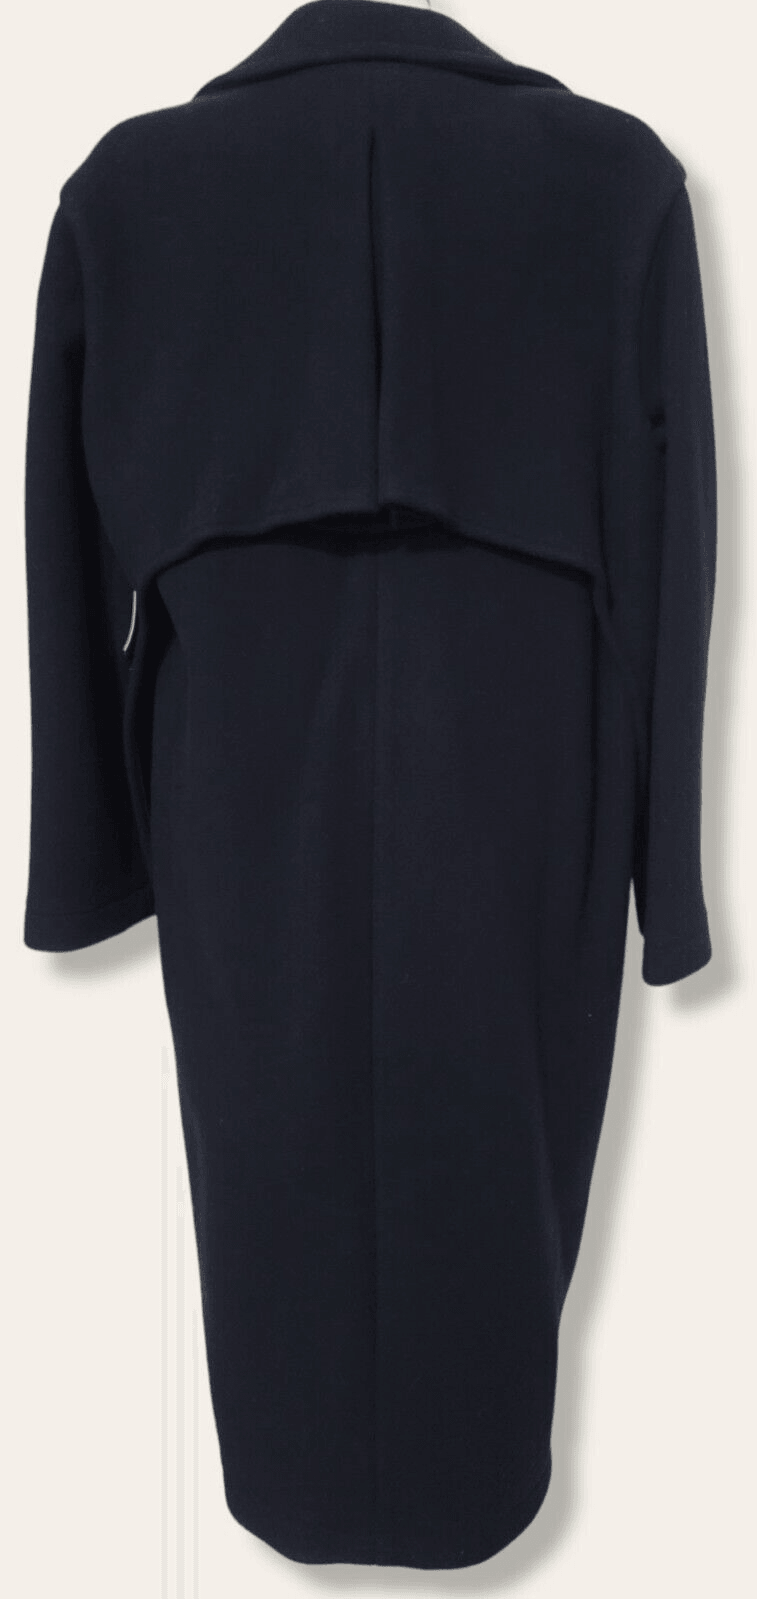 DKNY One Button Front Wool Blend Side Slits Overcoat Dark Navy Size M - SVNYFancy